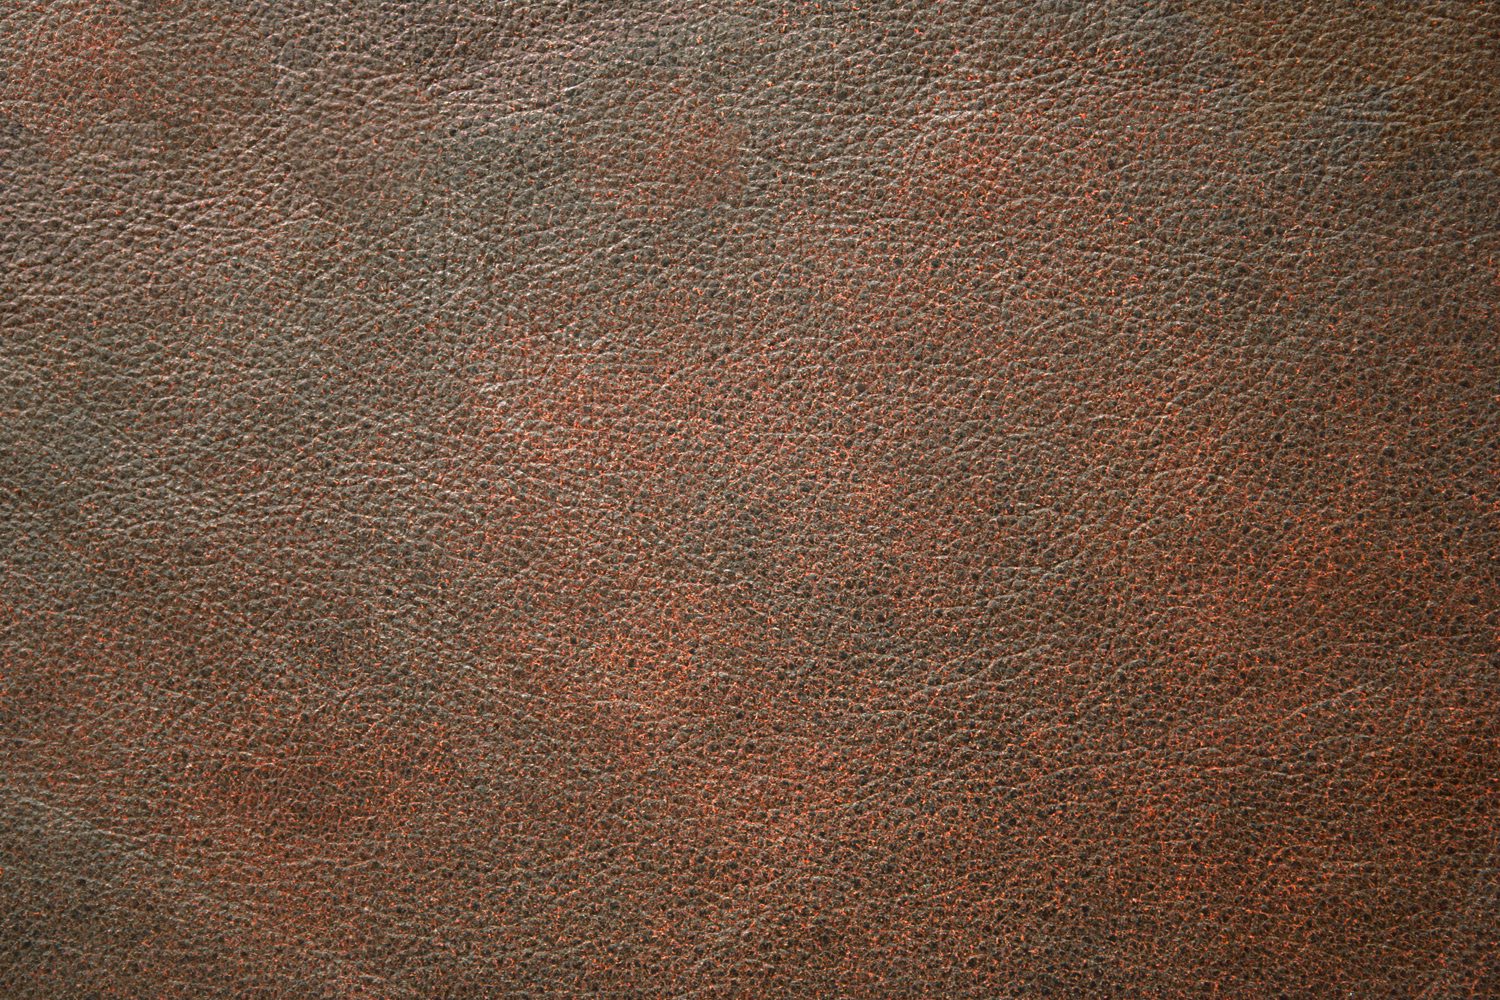 Leather Texture Picture Walpaper Clip Art